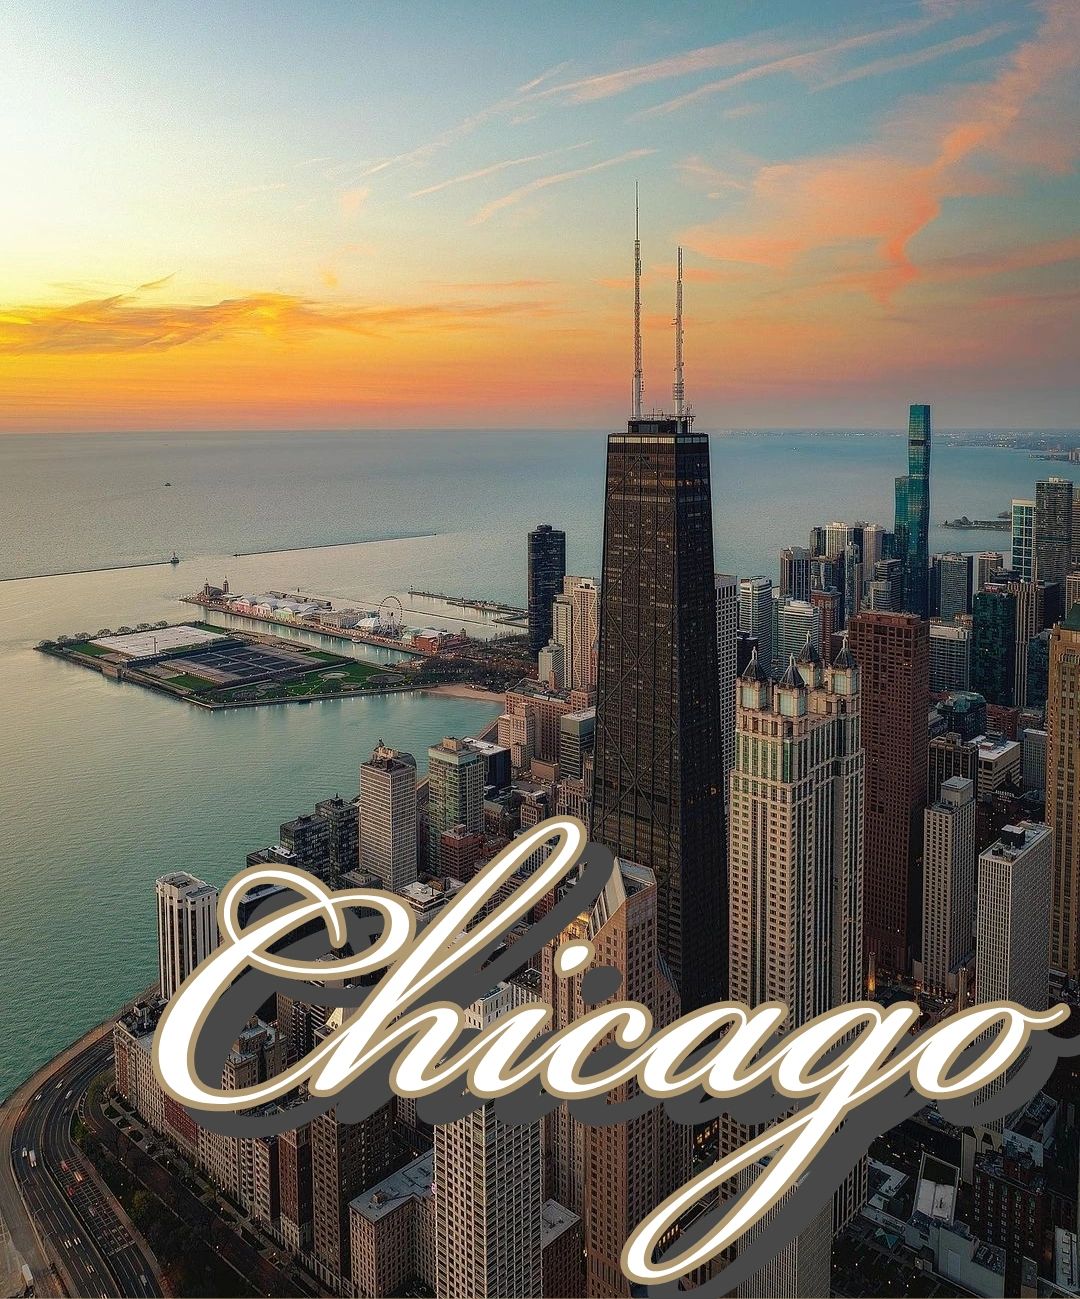 Chicago bachelorette party, bachelorette party Chicago, Chicago bachelorette party ideas, Chicago